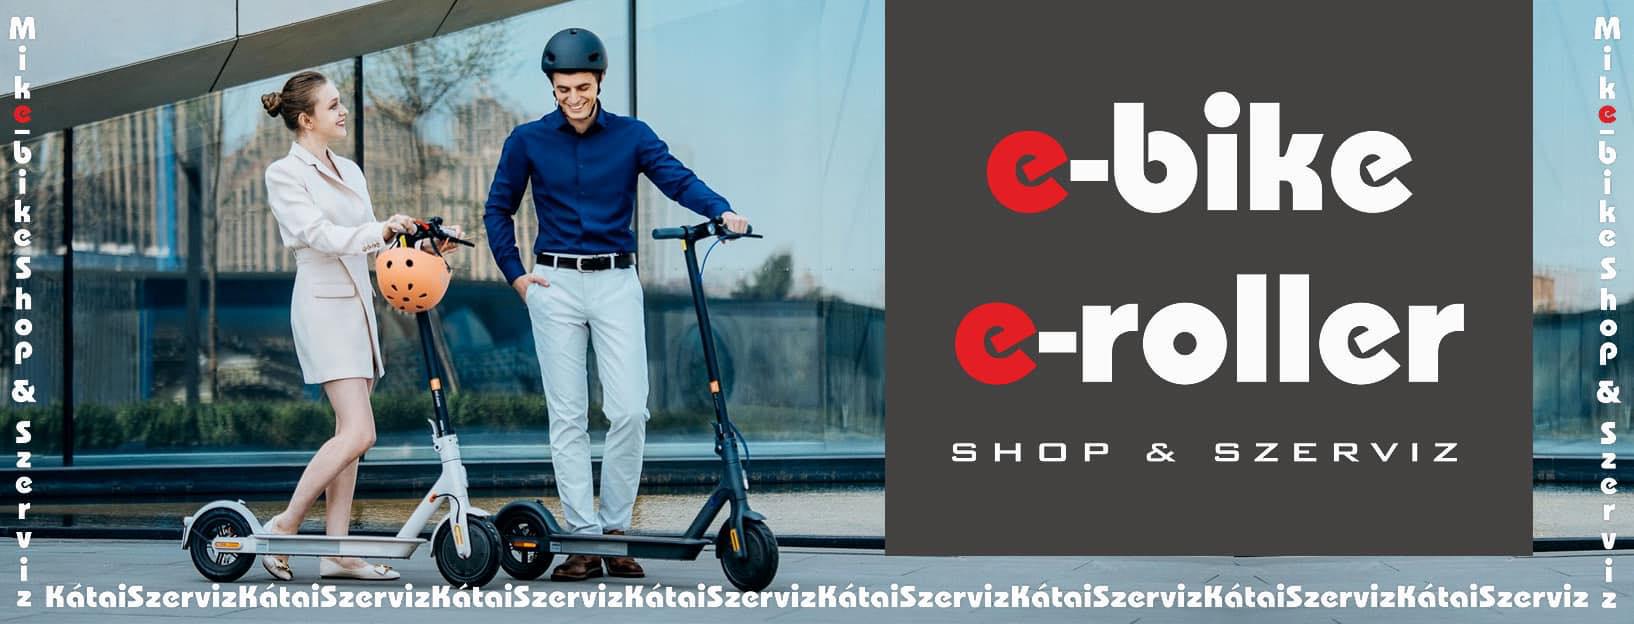 Images Mike-bike Shop & Szerviz E-roller E-bike